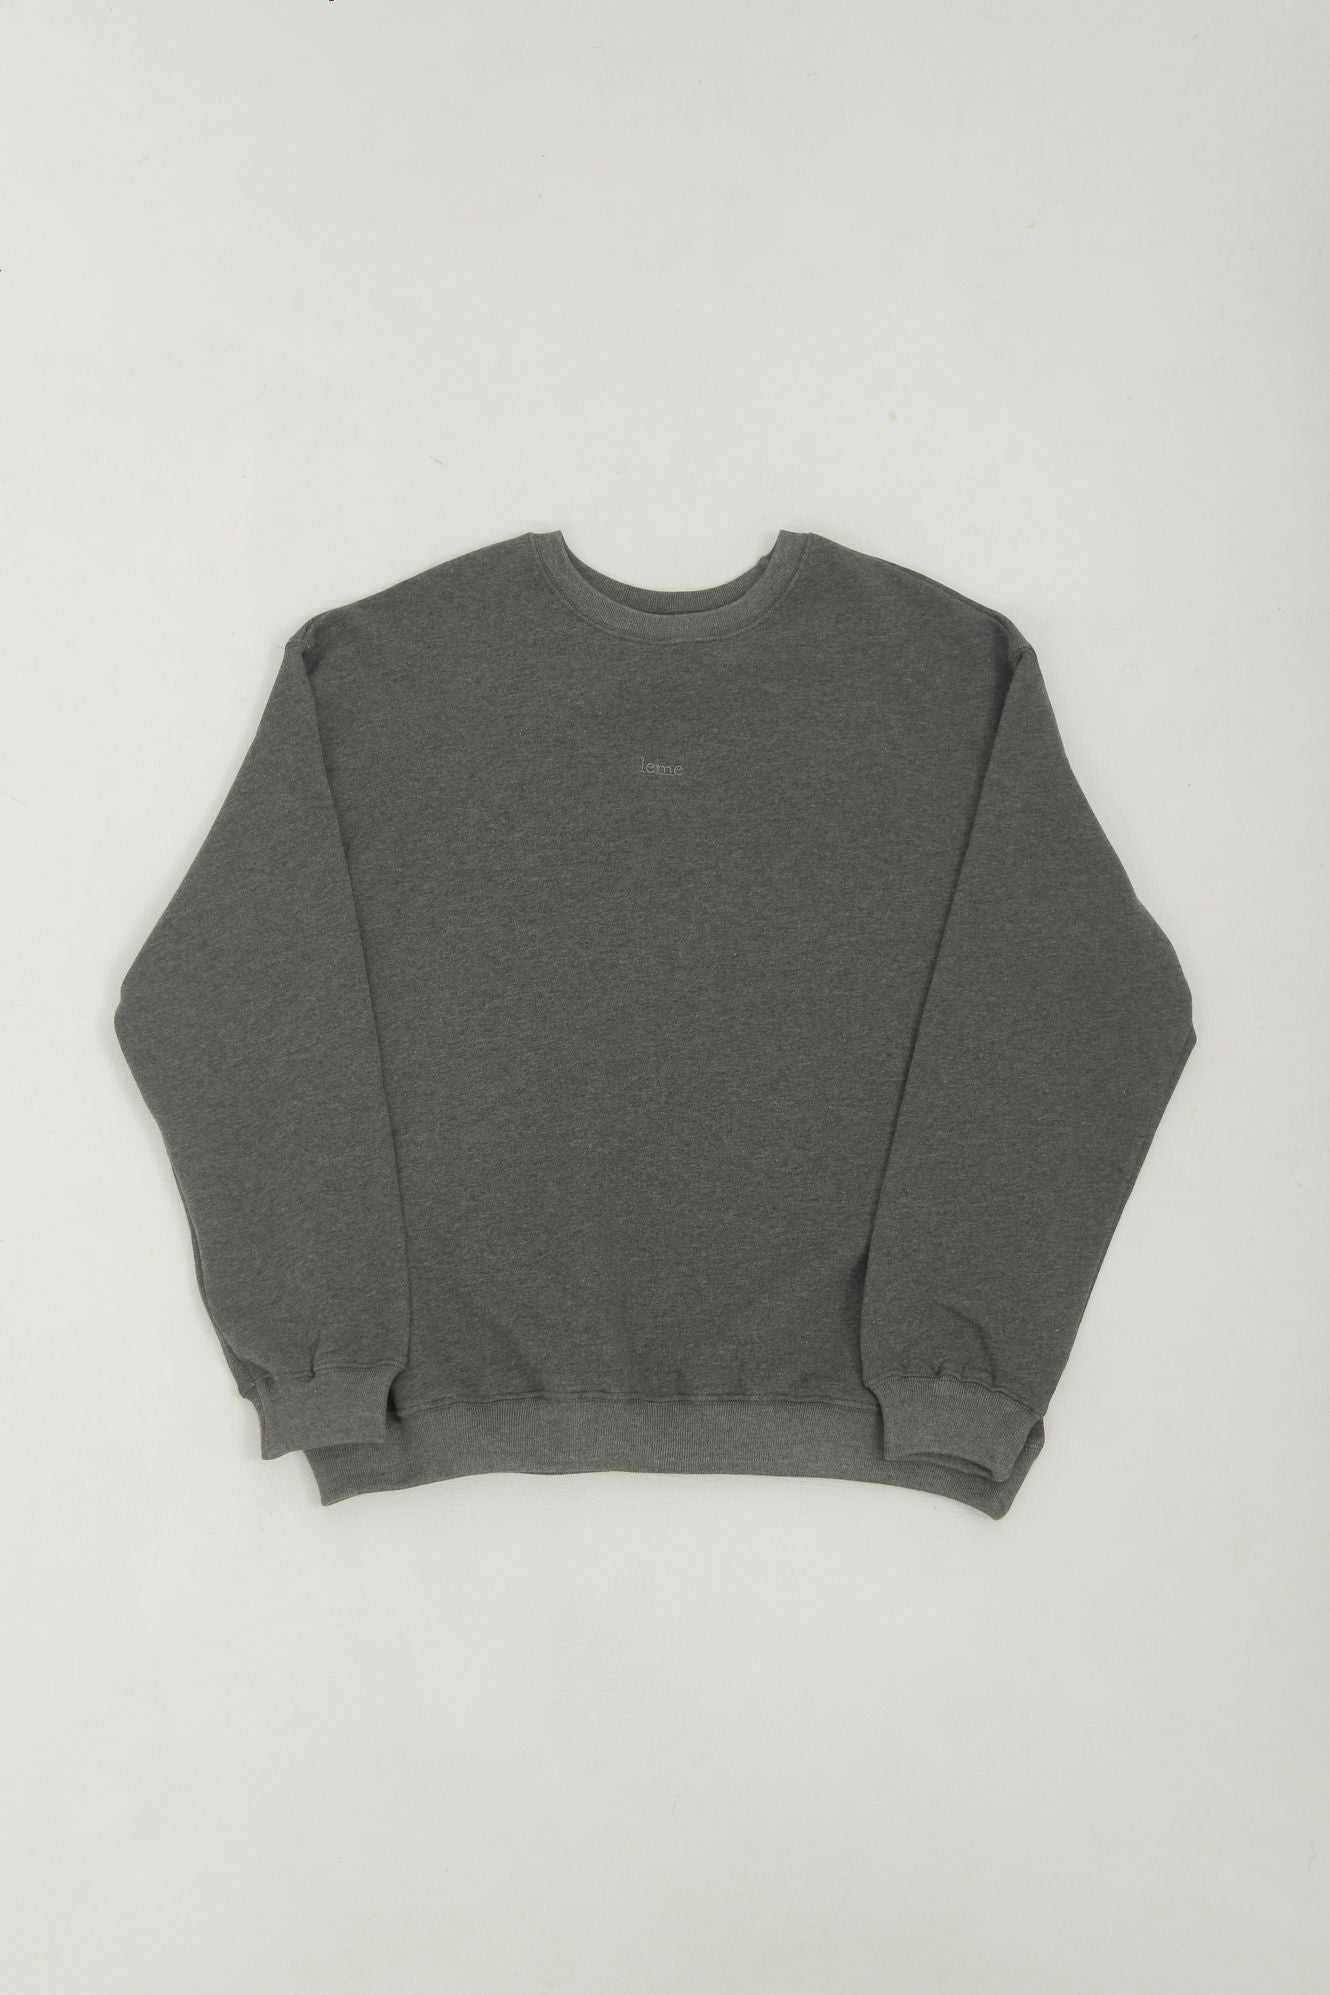 LM Leme logo sweatshirt(Dark grey)